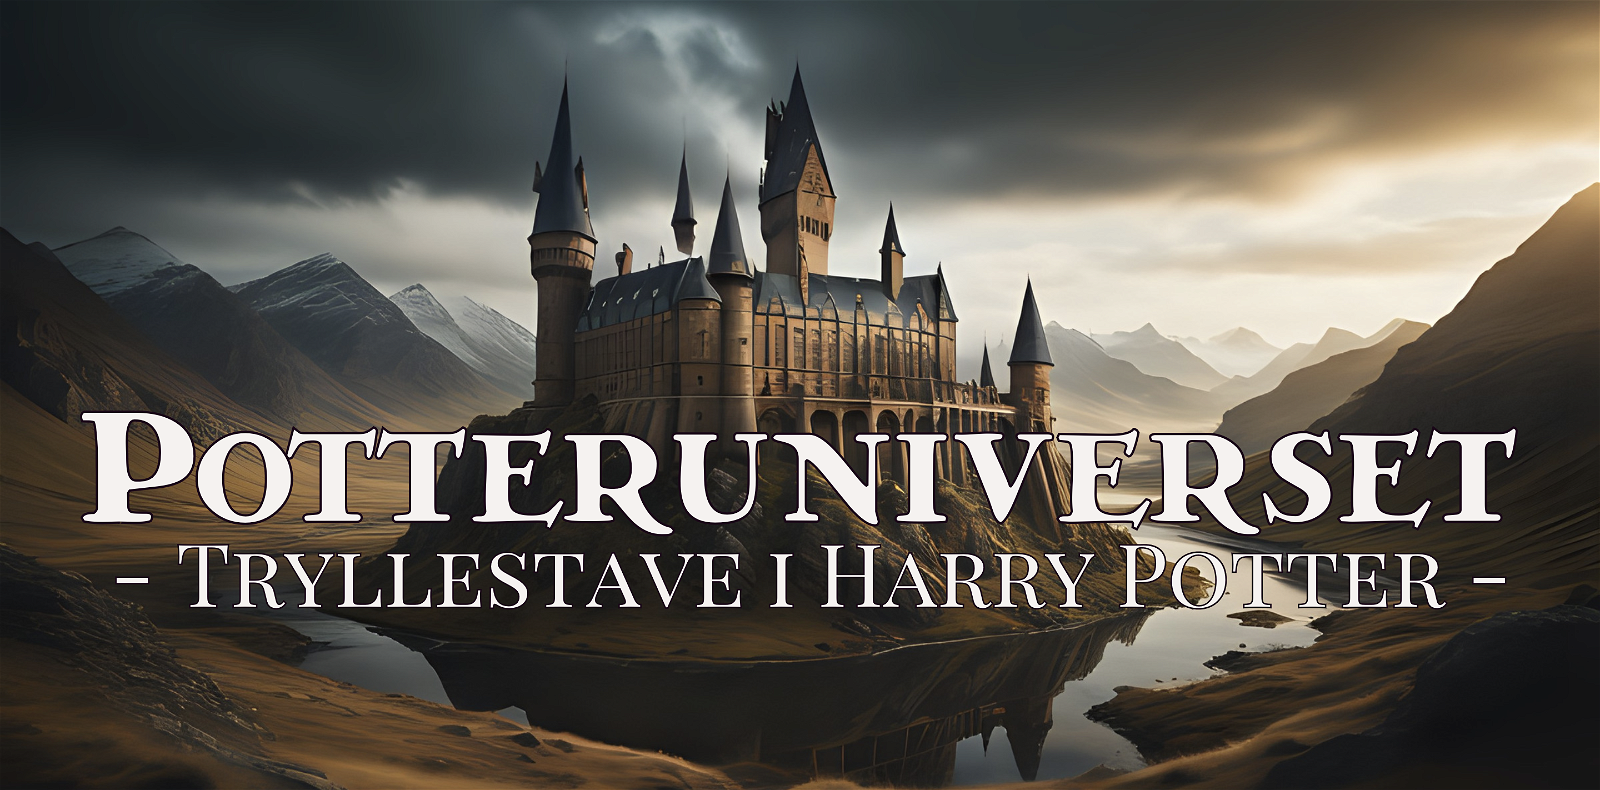 Potteruniverset: Tryllestave i Harry Potter